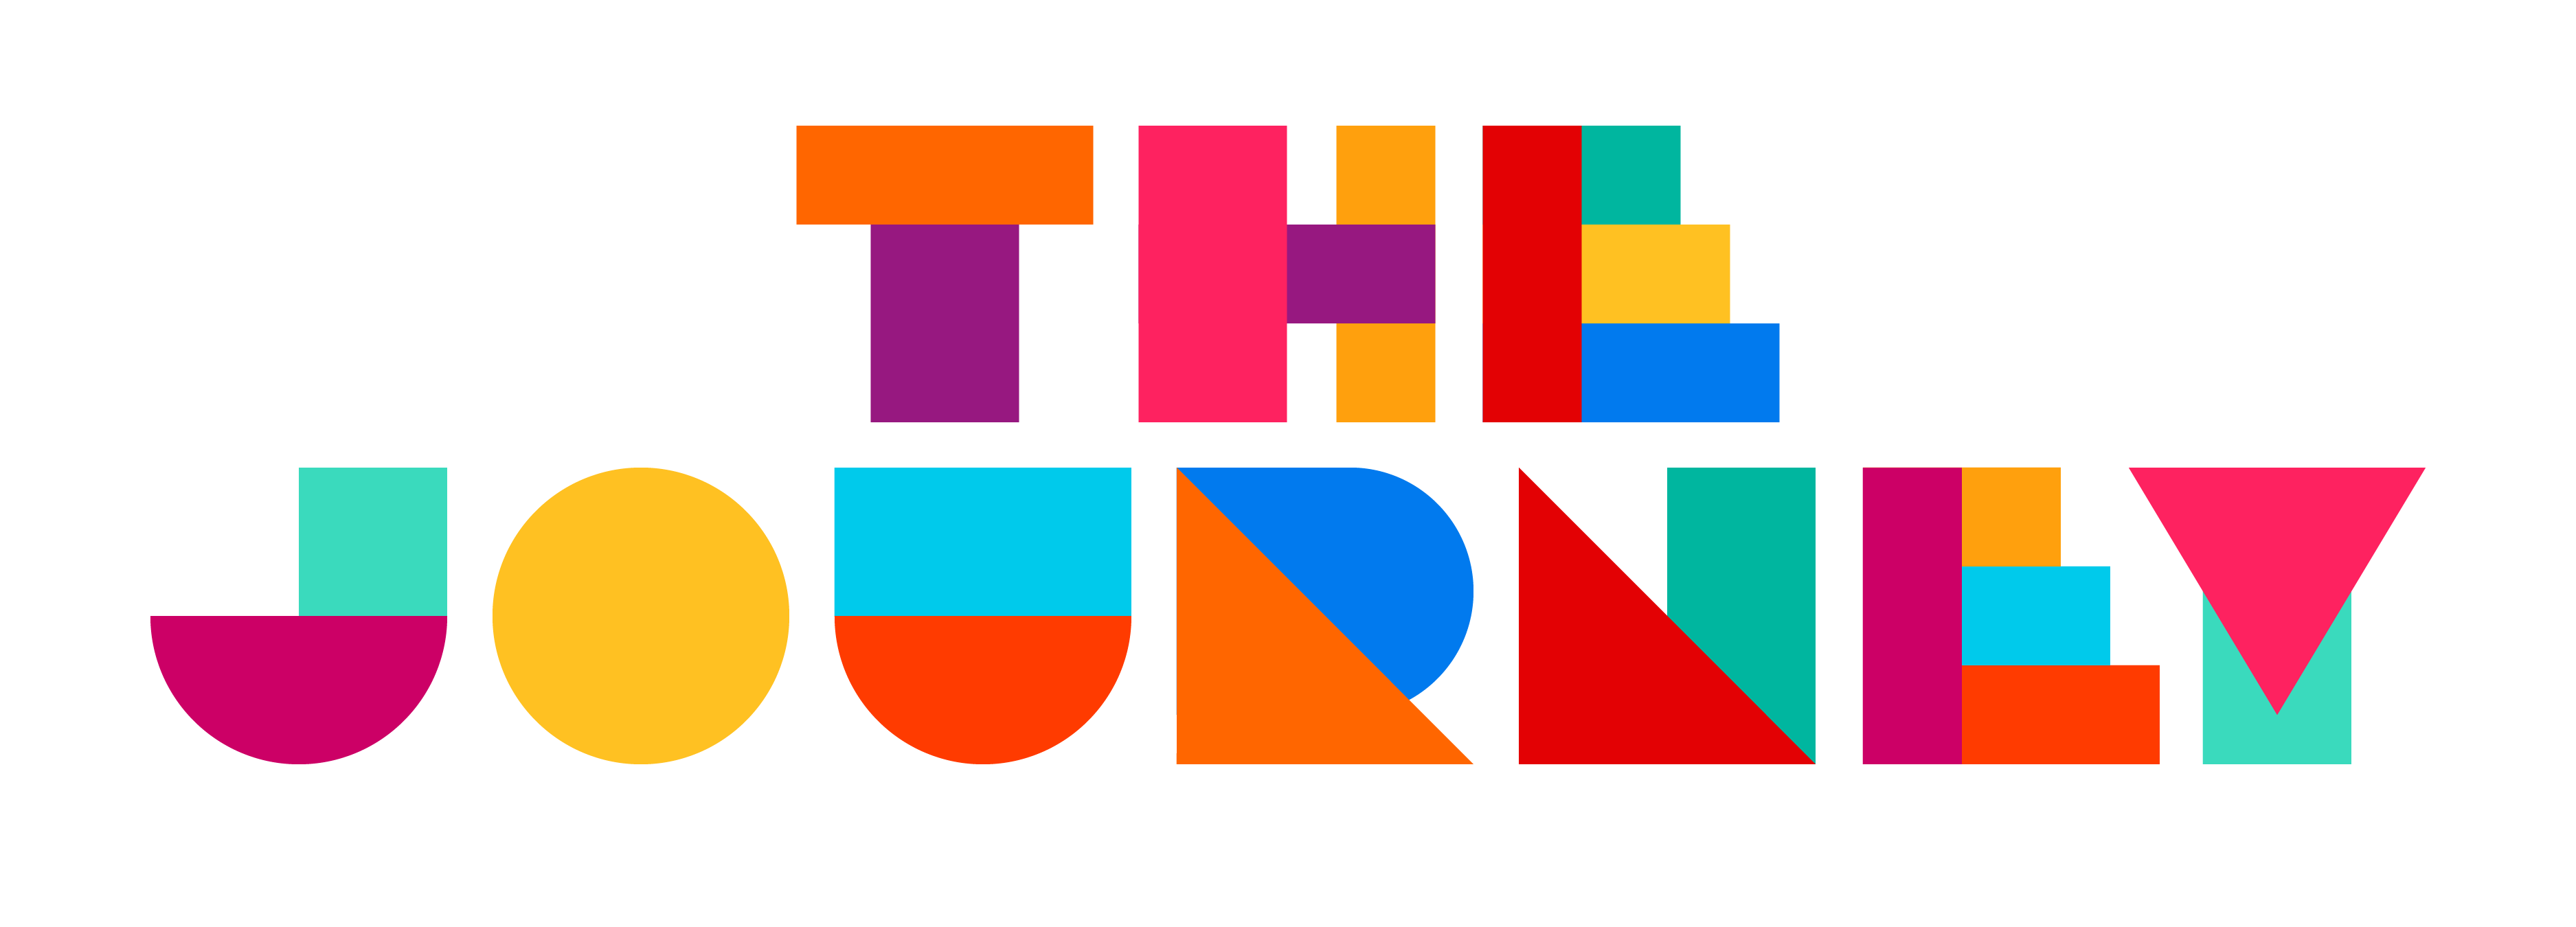 nyi the journey logo centered